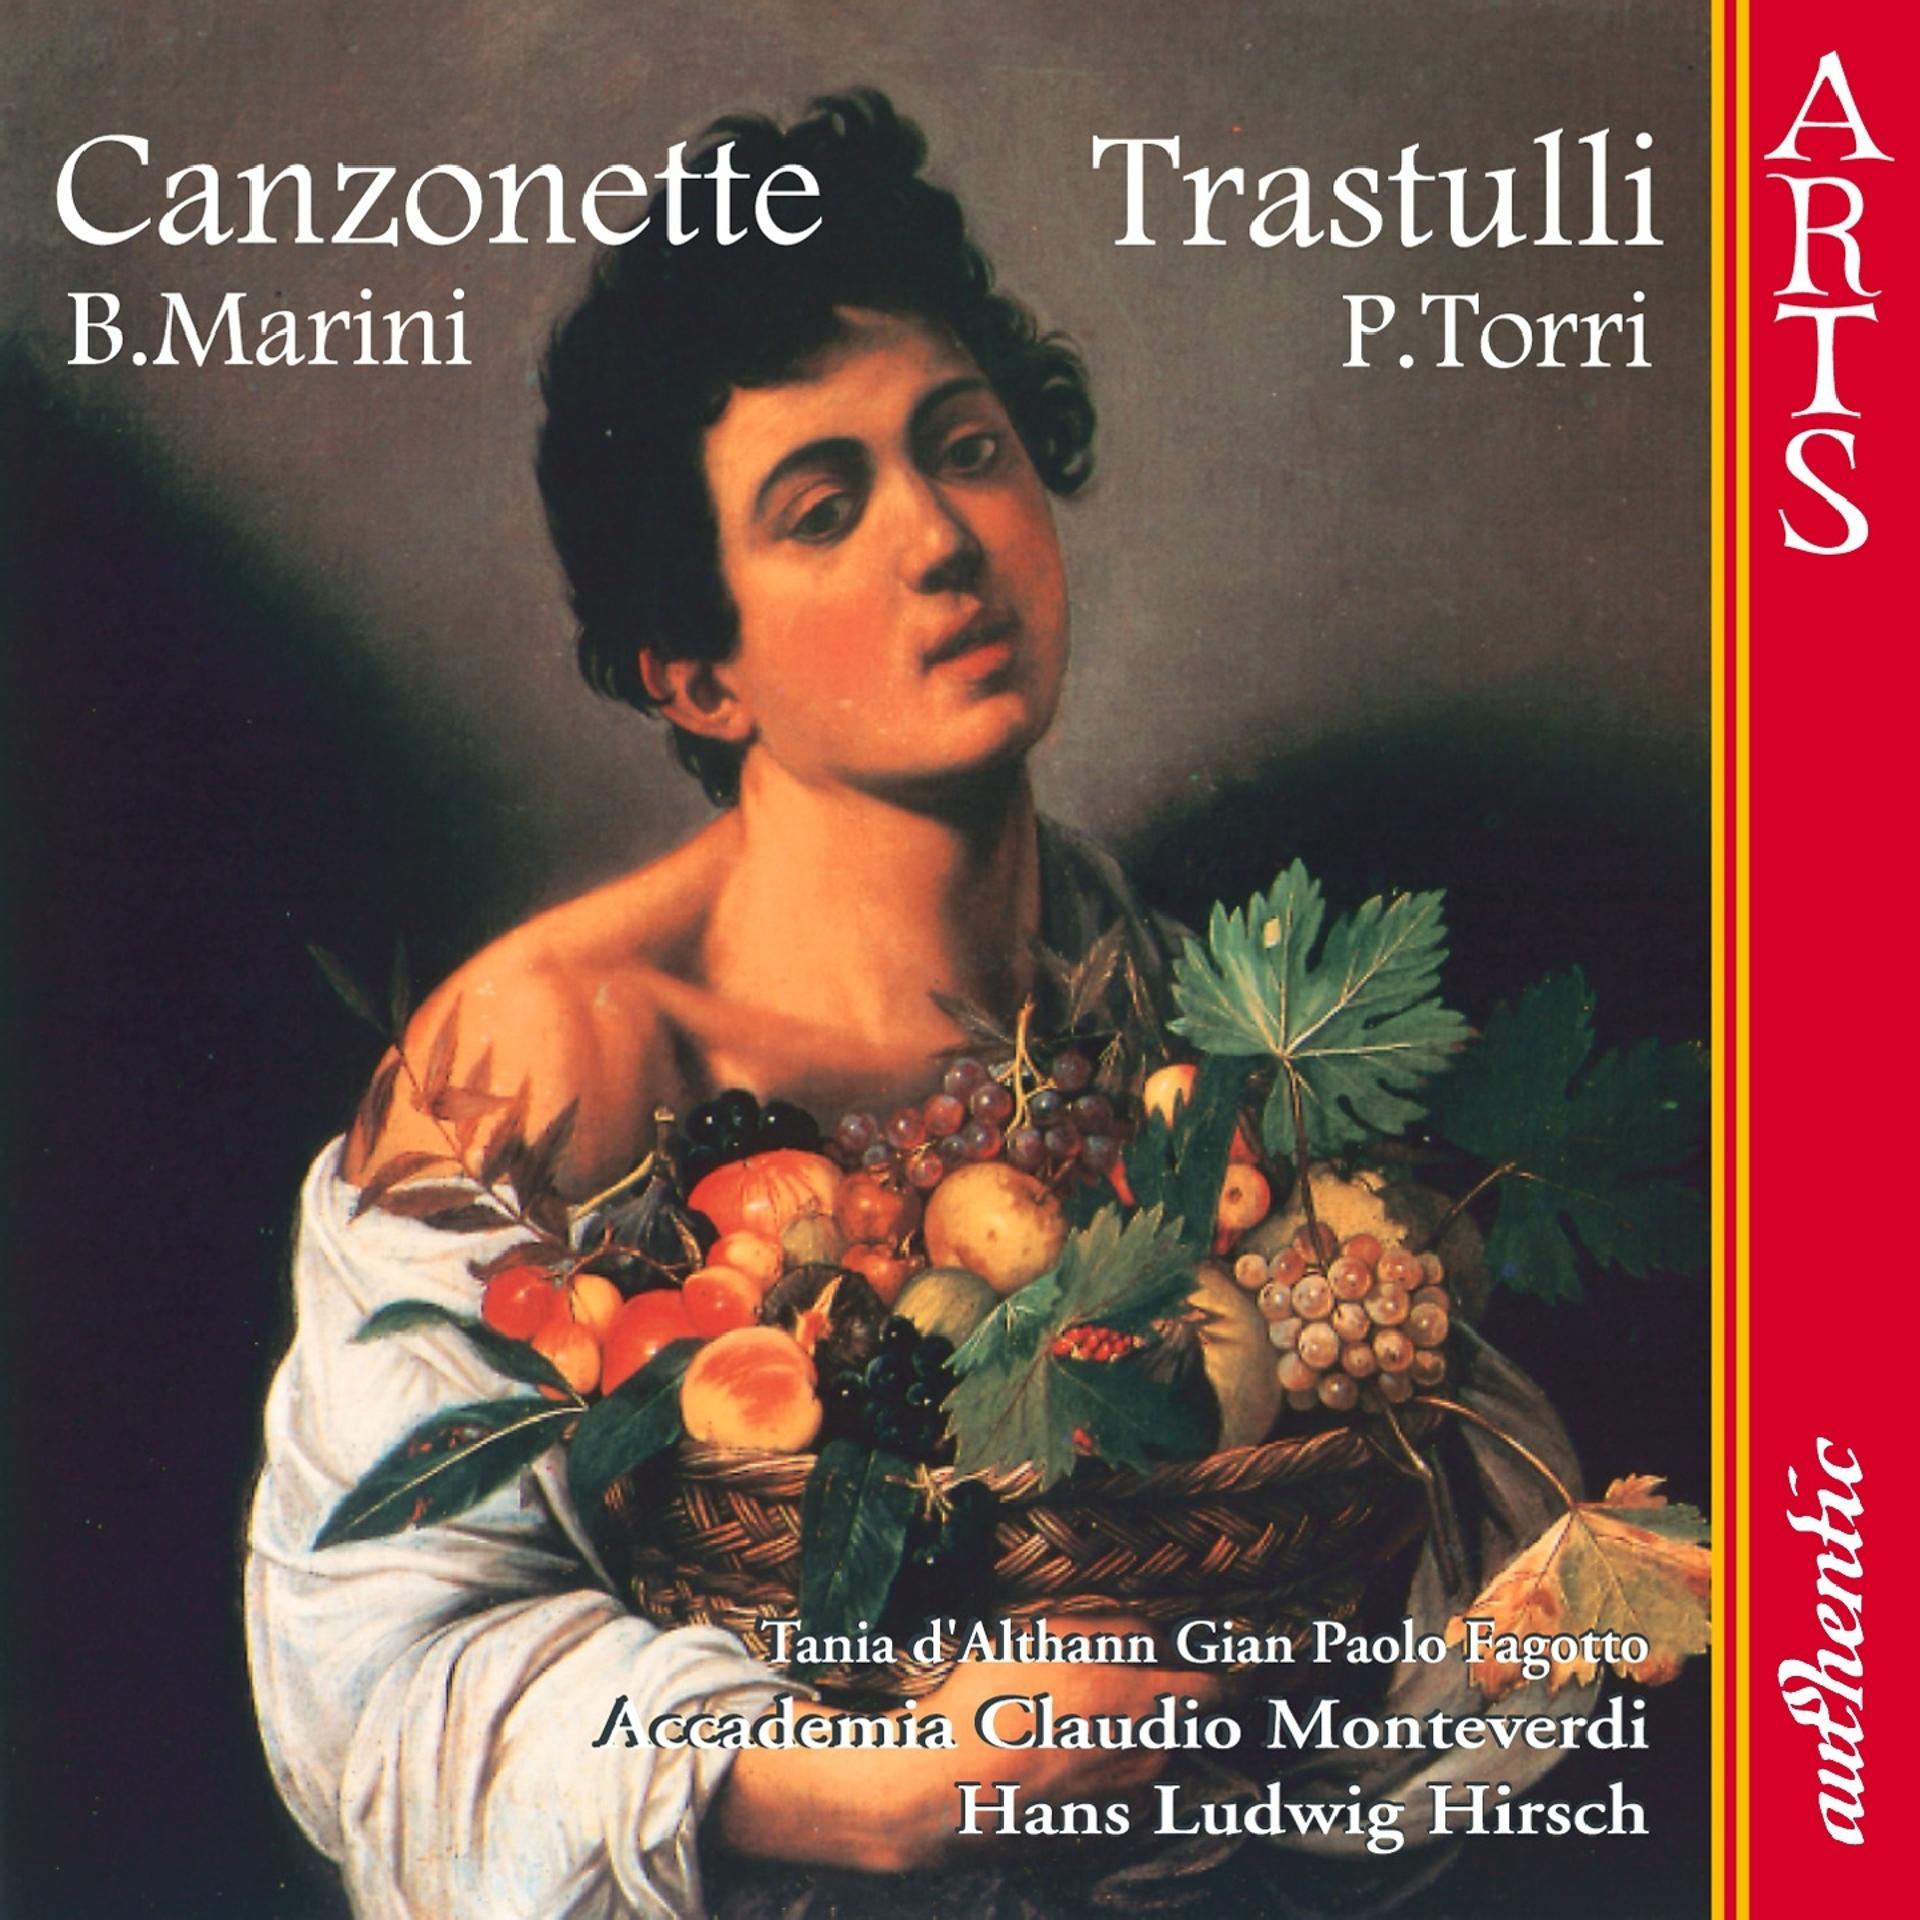 Постер к треку Accademia Claudio Monteverdi, Hans Ludwig Hirsch, Tania d'Althann, Gian Paolo Fagotto - Trastulli: Dolce auretta